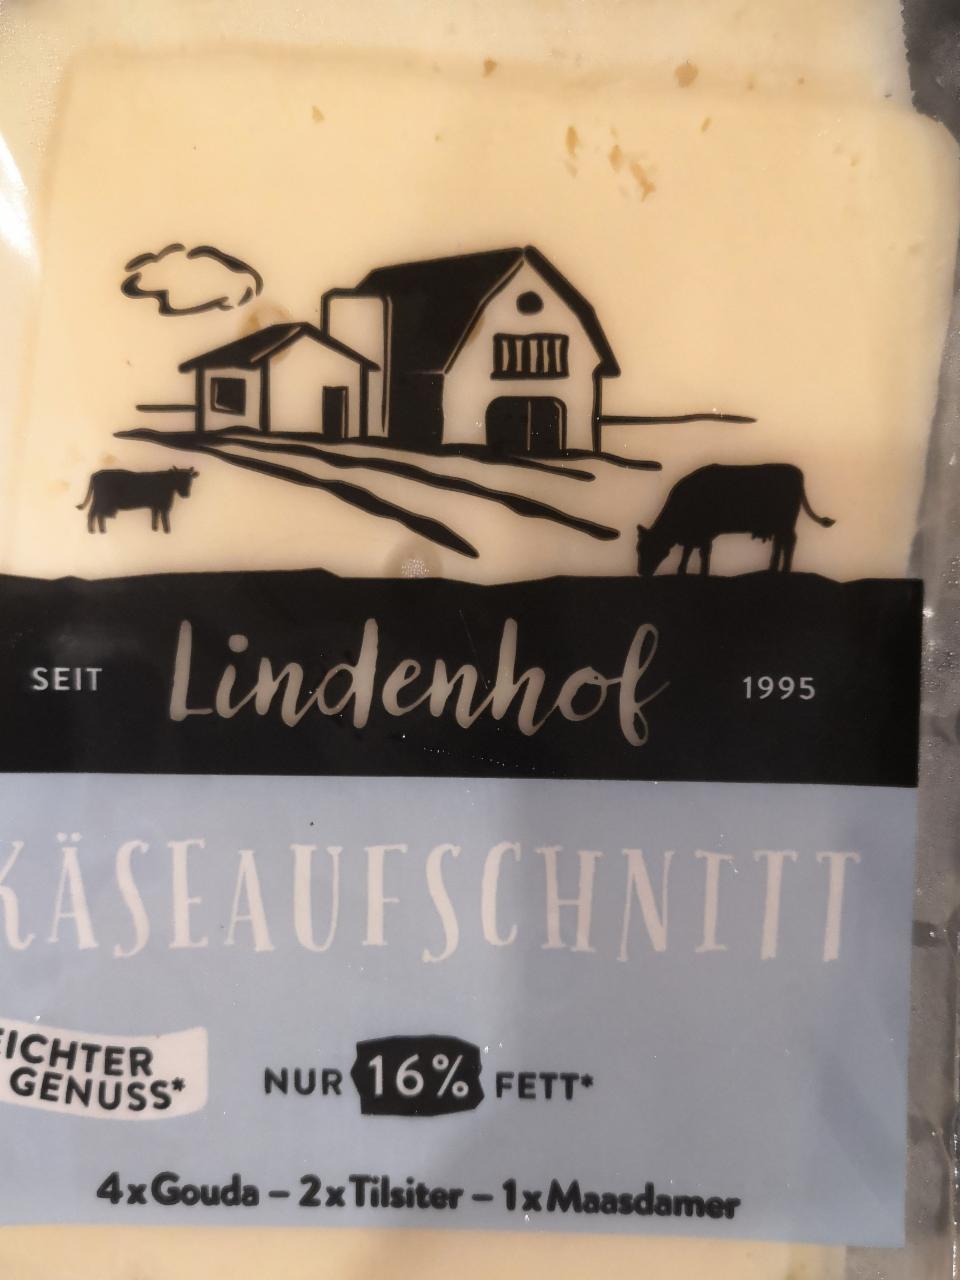 Fotografie - Kaseaufschnitt 16% fett Lindenhof